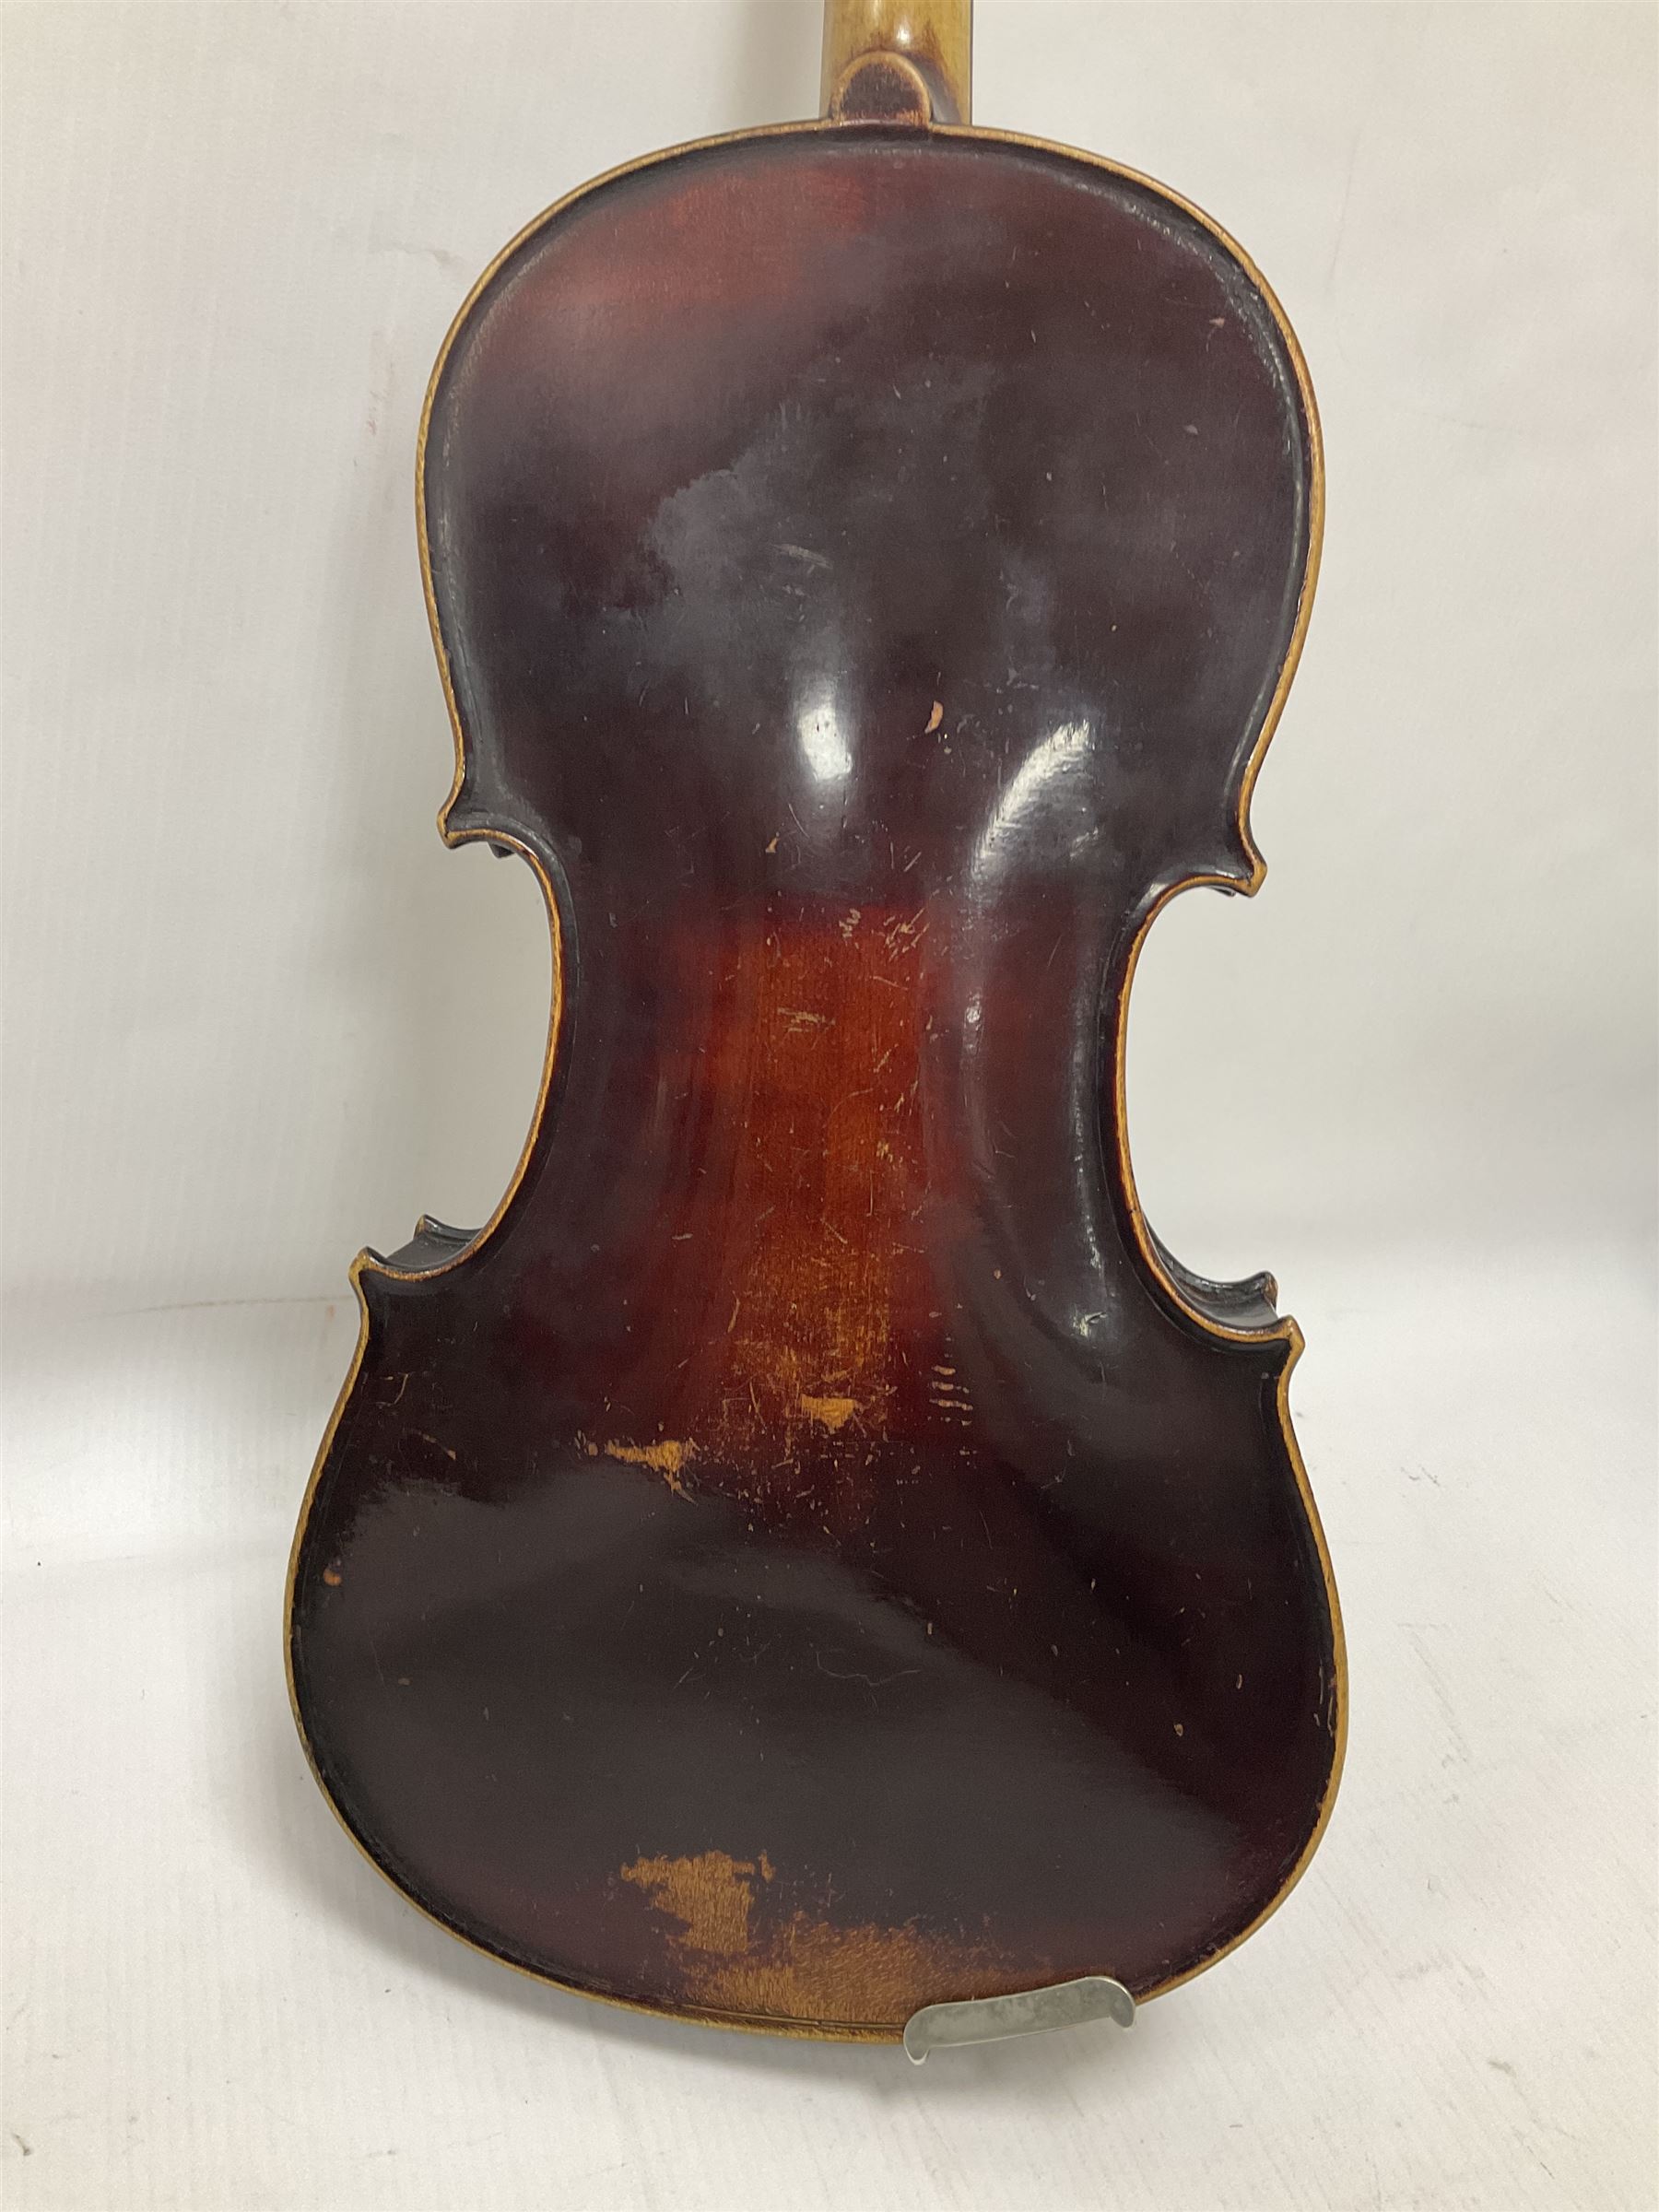 Neuner & Hornstiner early 20th century half size violin c1900 - Image 13 of 16